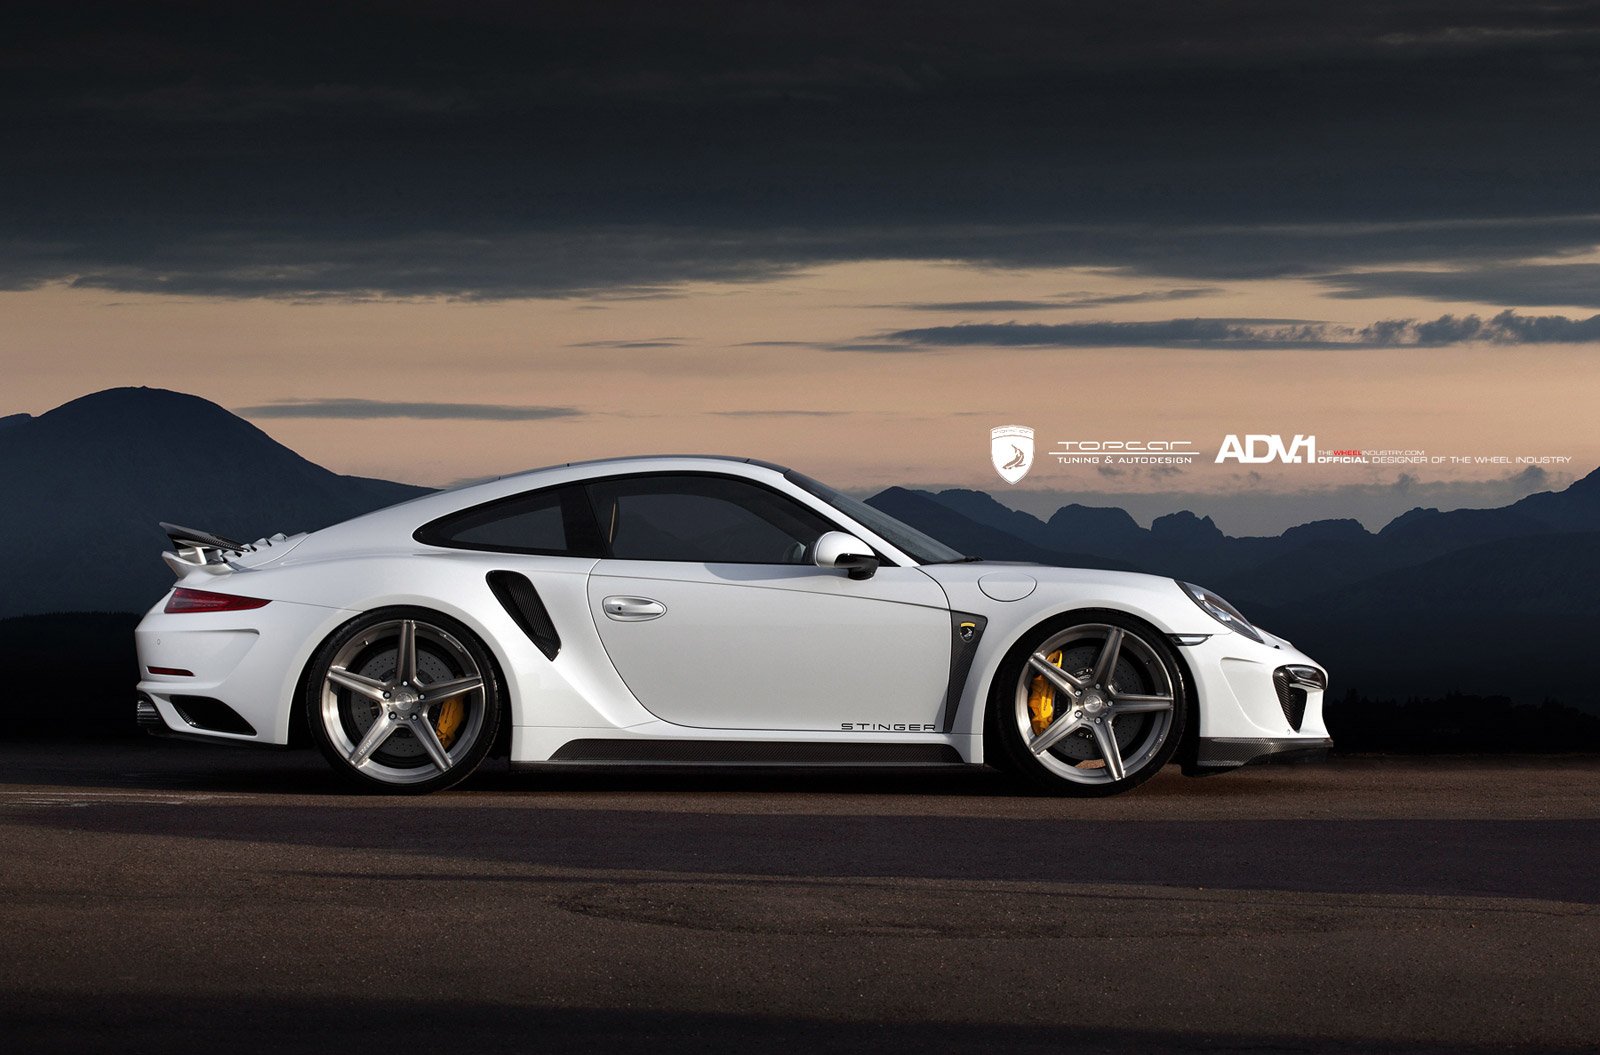 2014, Adv1, Porsche, 991, Turbo, Topcar, White, Supercars, Wheels Wallpaper